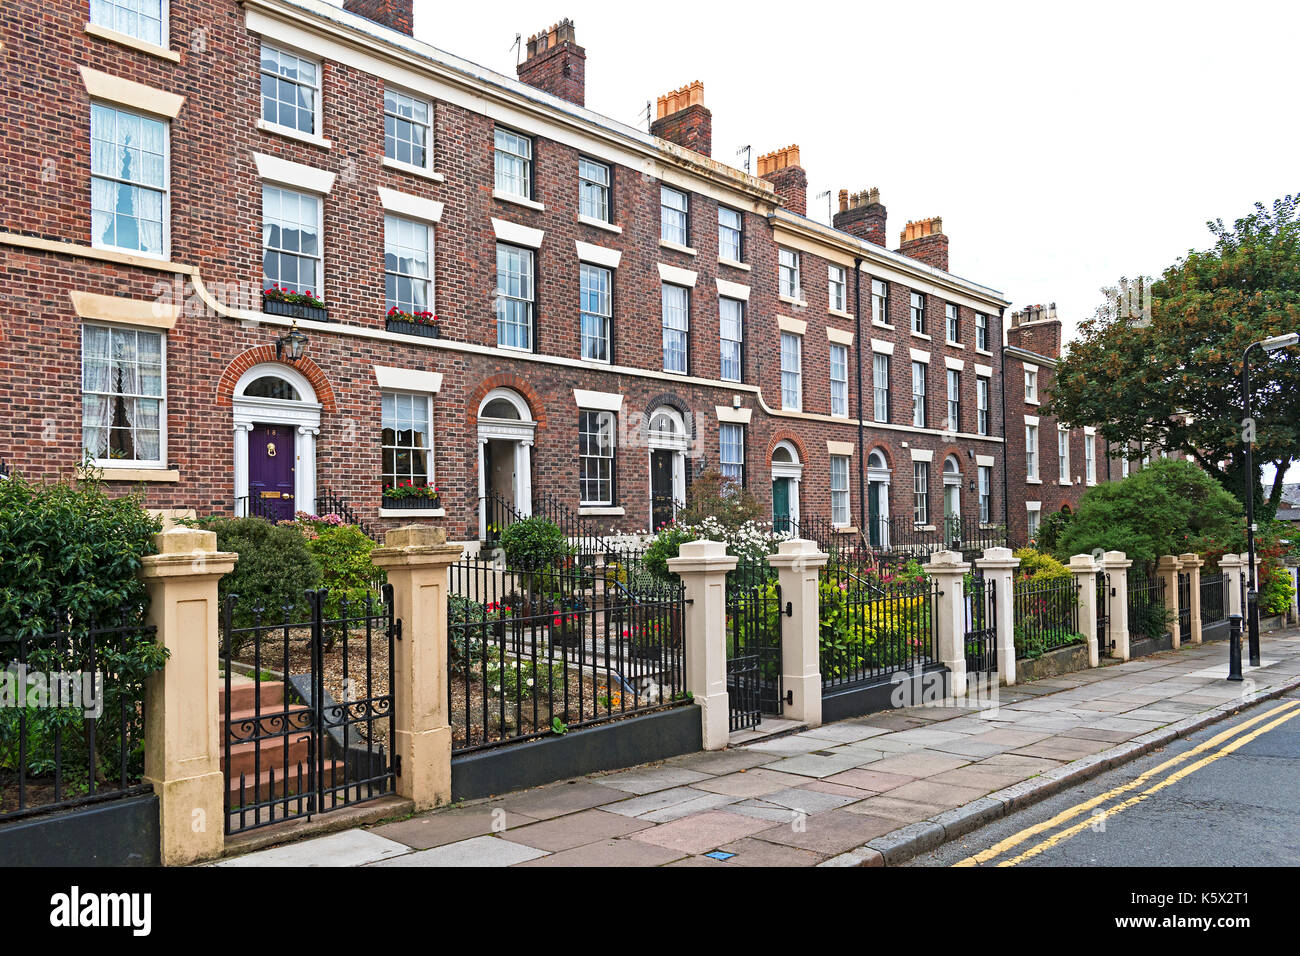 Casa georgiana en el Barrio Georgian de Liverpool, Inglaterra, Gran Bretaña, Reino Unido. Foto de stock